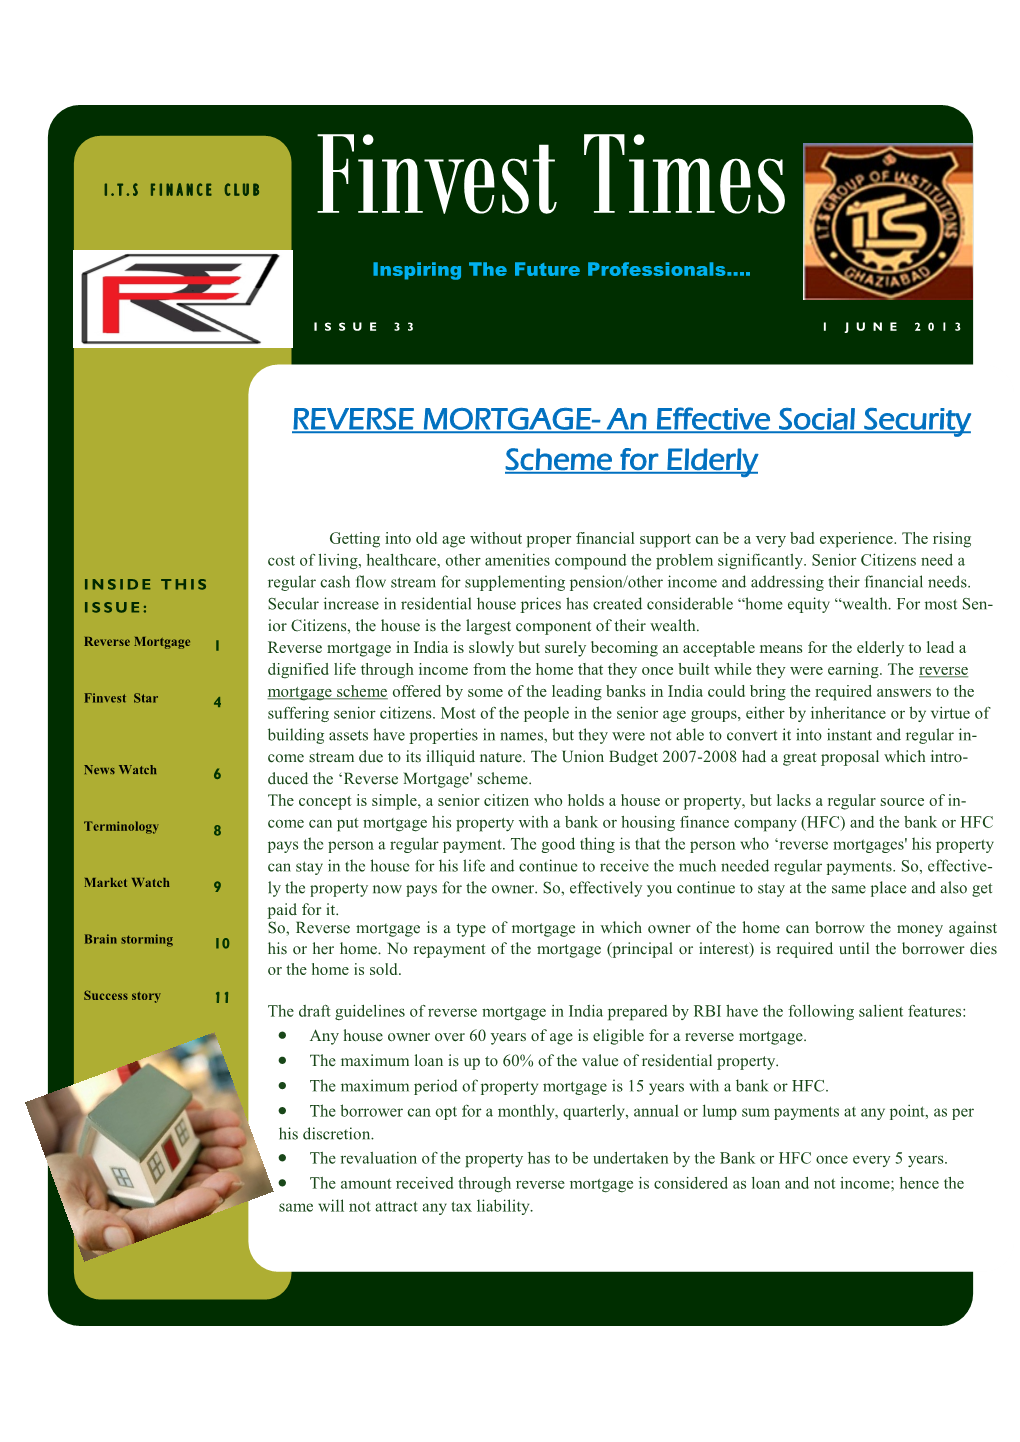 REVERSE MORTGAGE- an Effective Social Security Scheme for Elderly